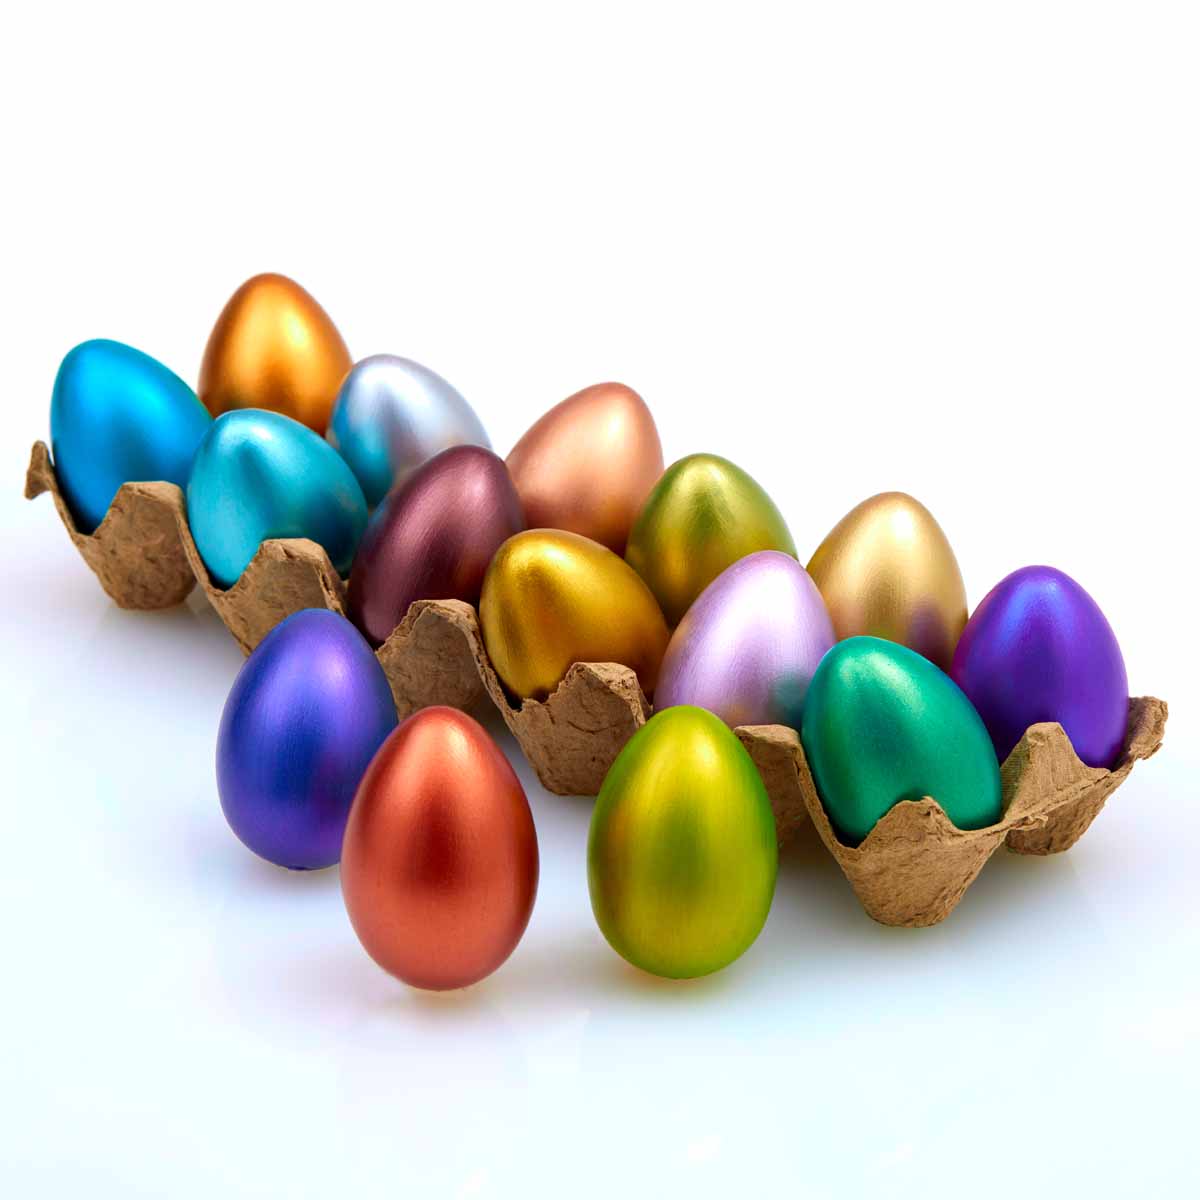 Jewel-Tone Easter Eggs